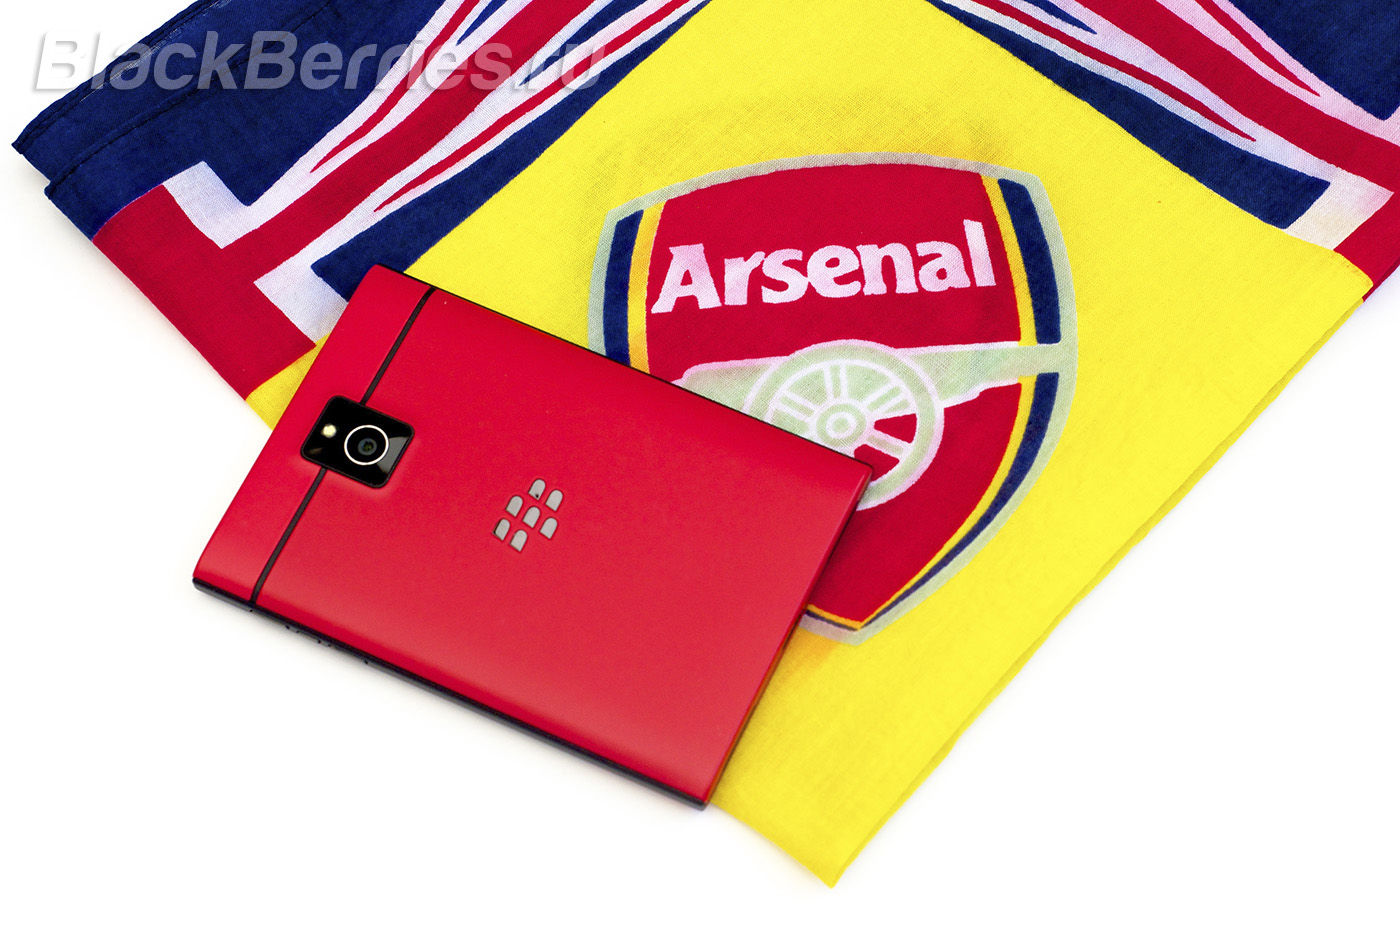 BlackBerry-Passport-Red-Arsenal